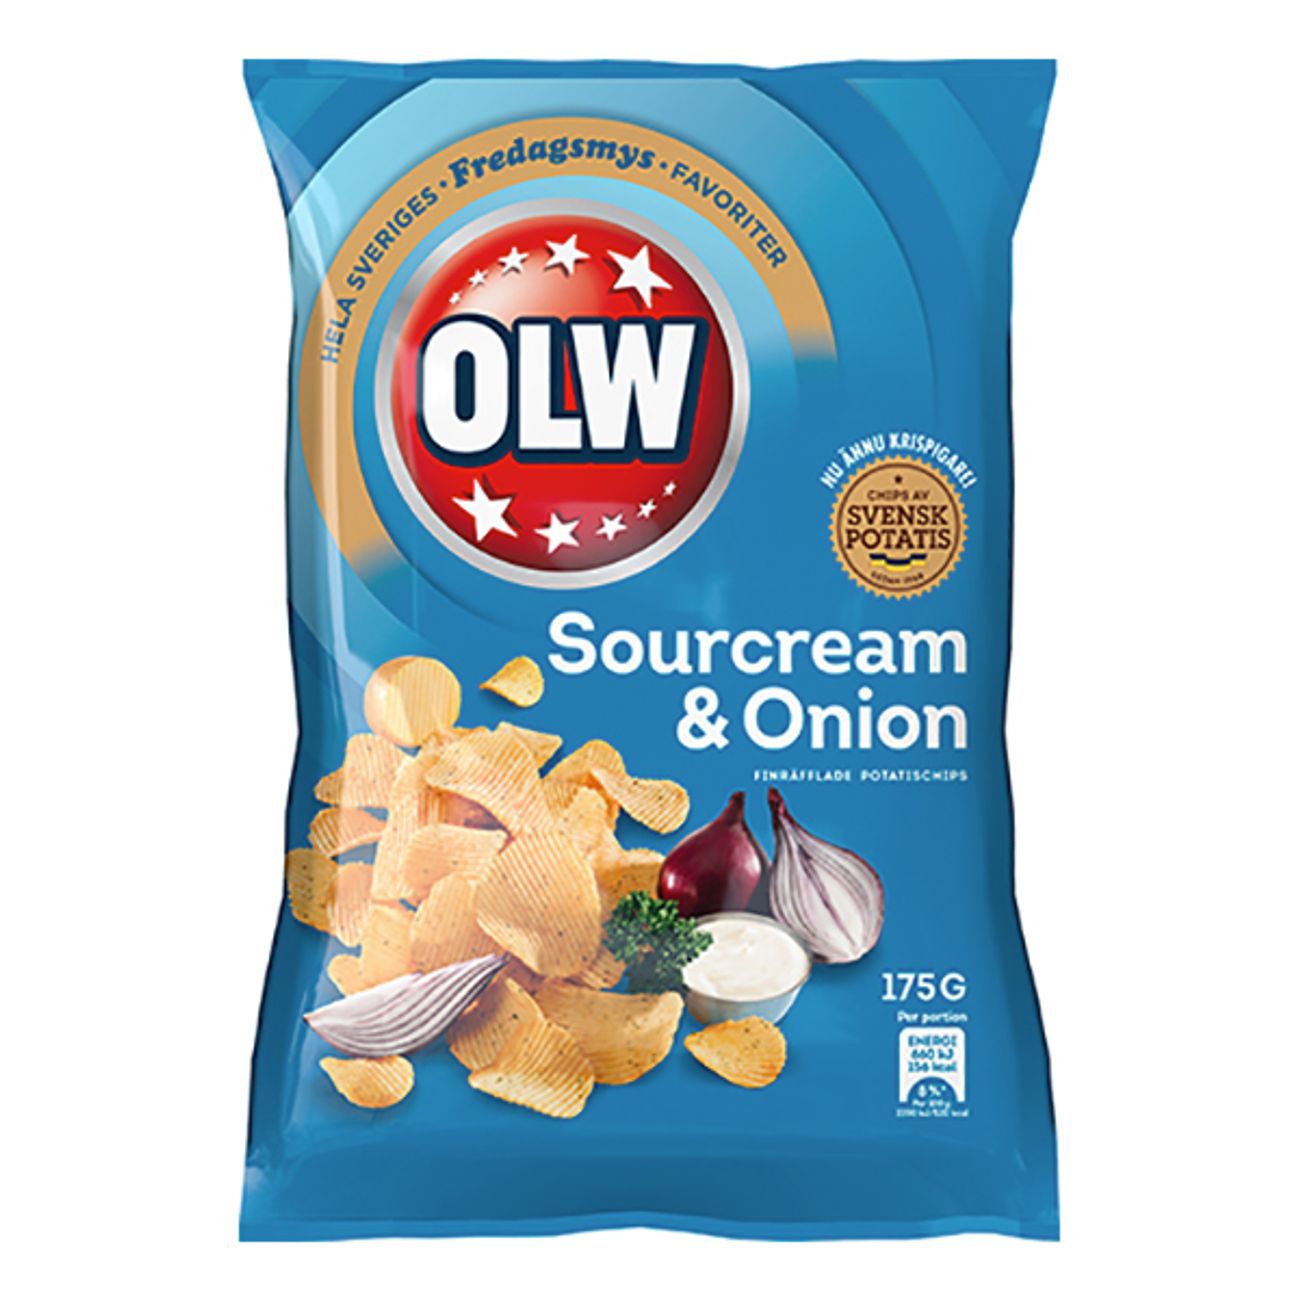 olw-sourcream-onion-chips2-1